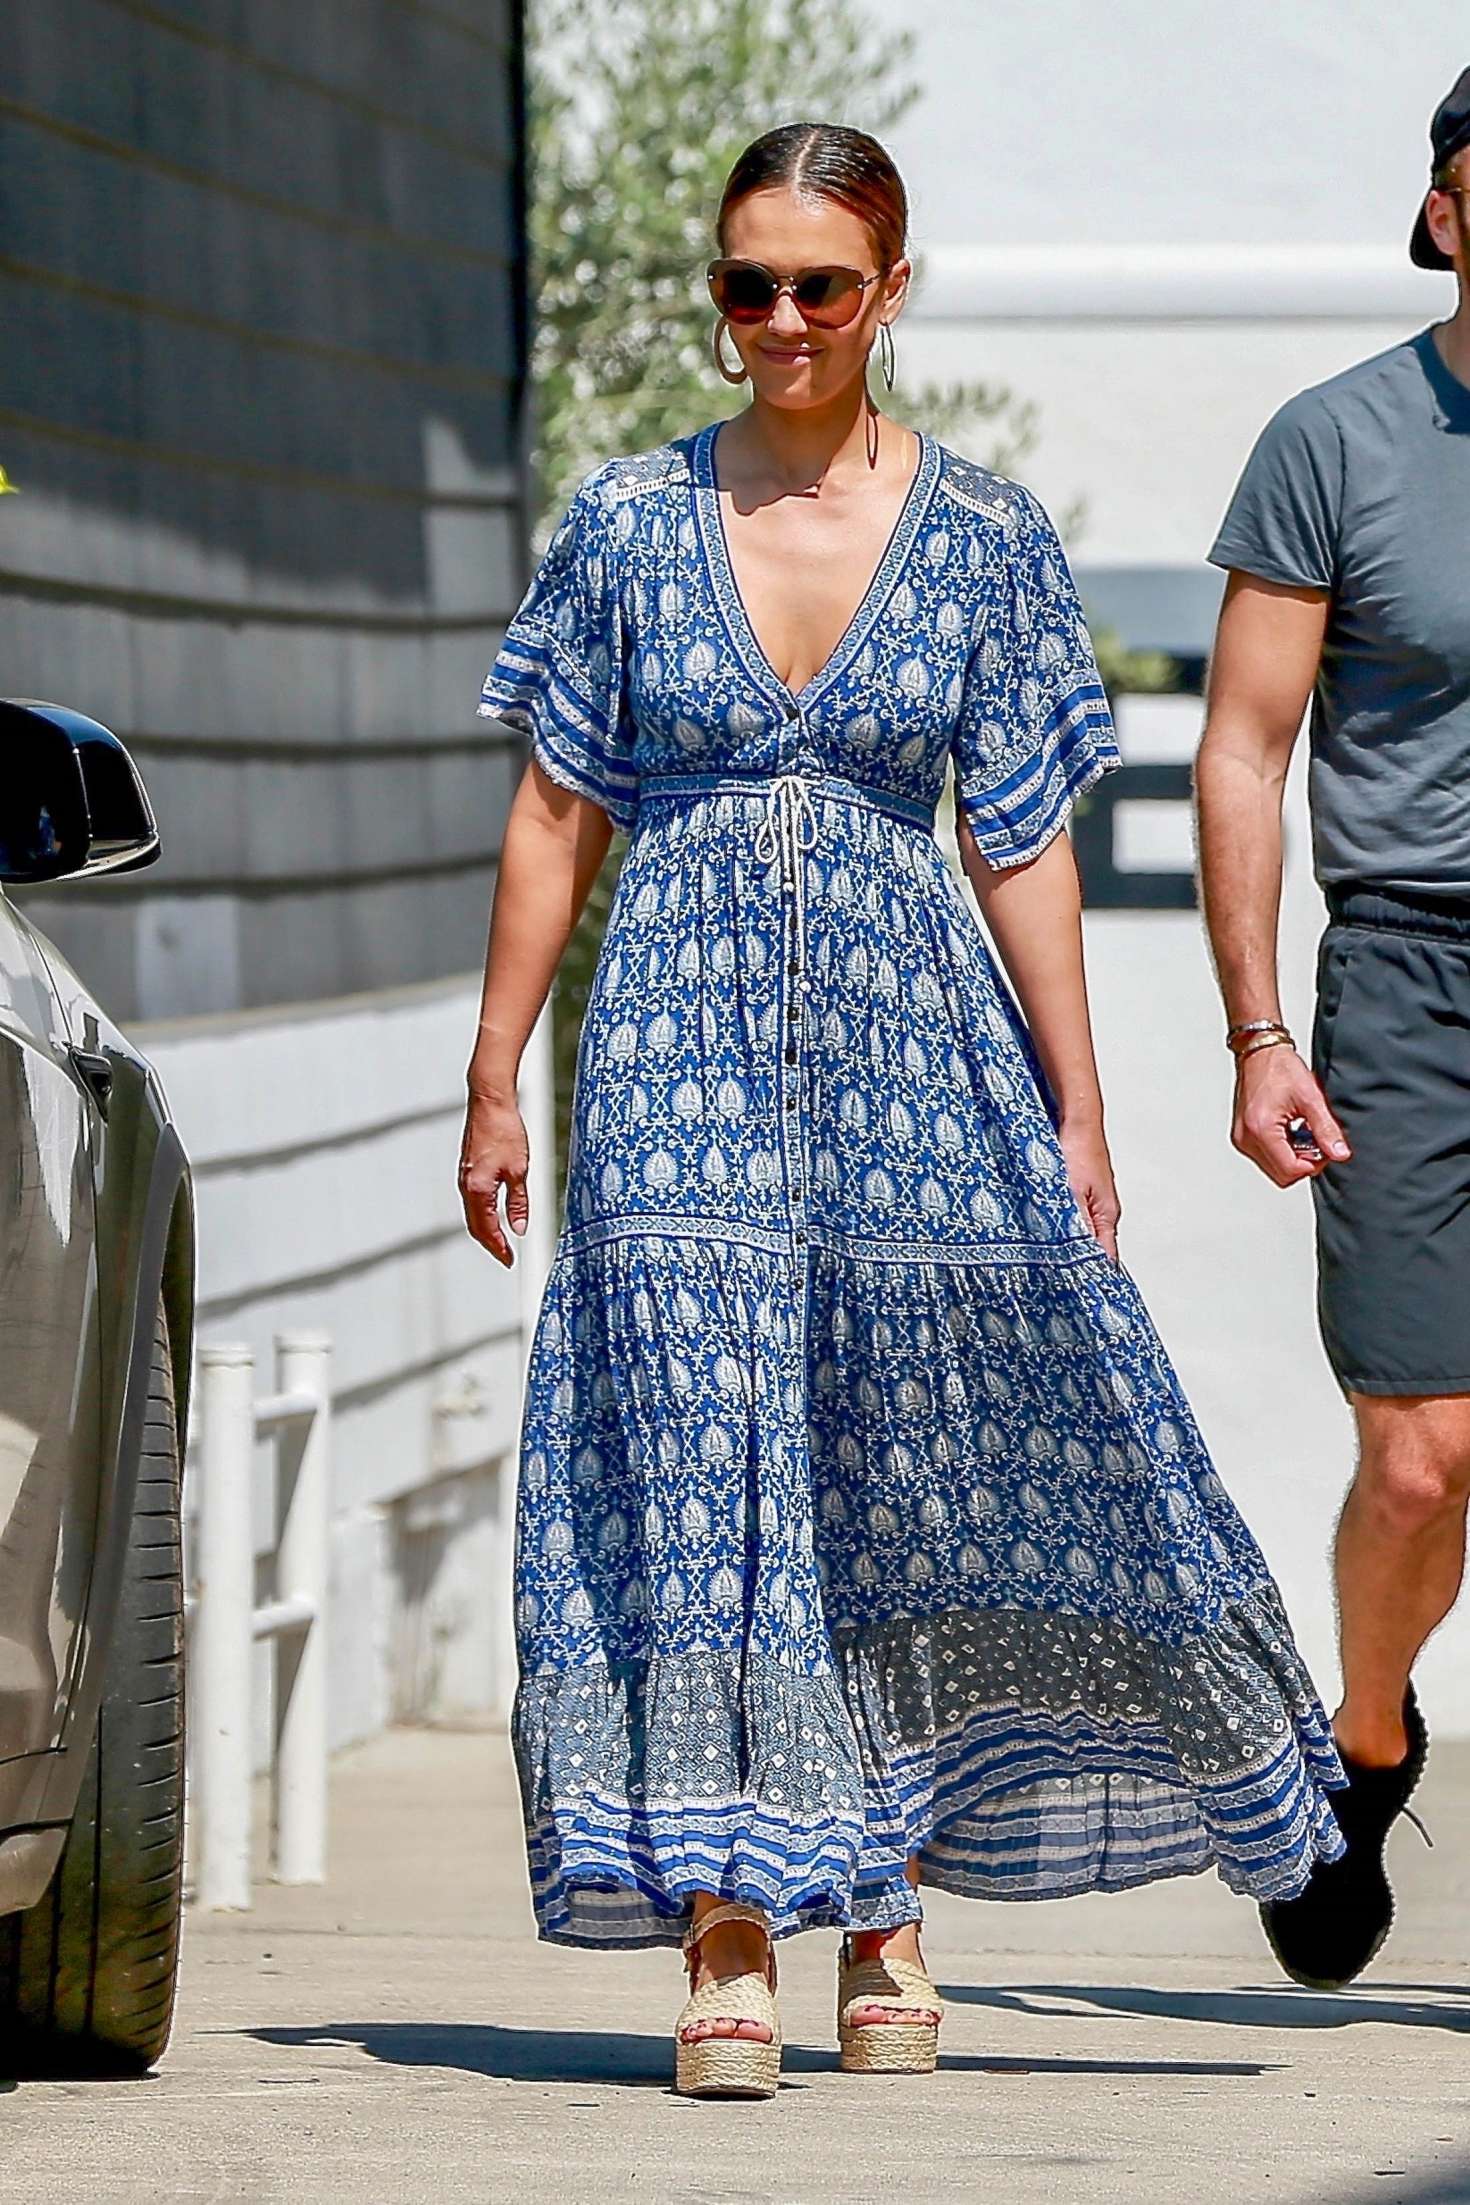 Jessica Alba in Summer Blue Dress â€“ Shopping in LA